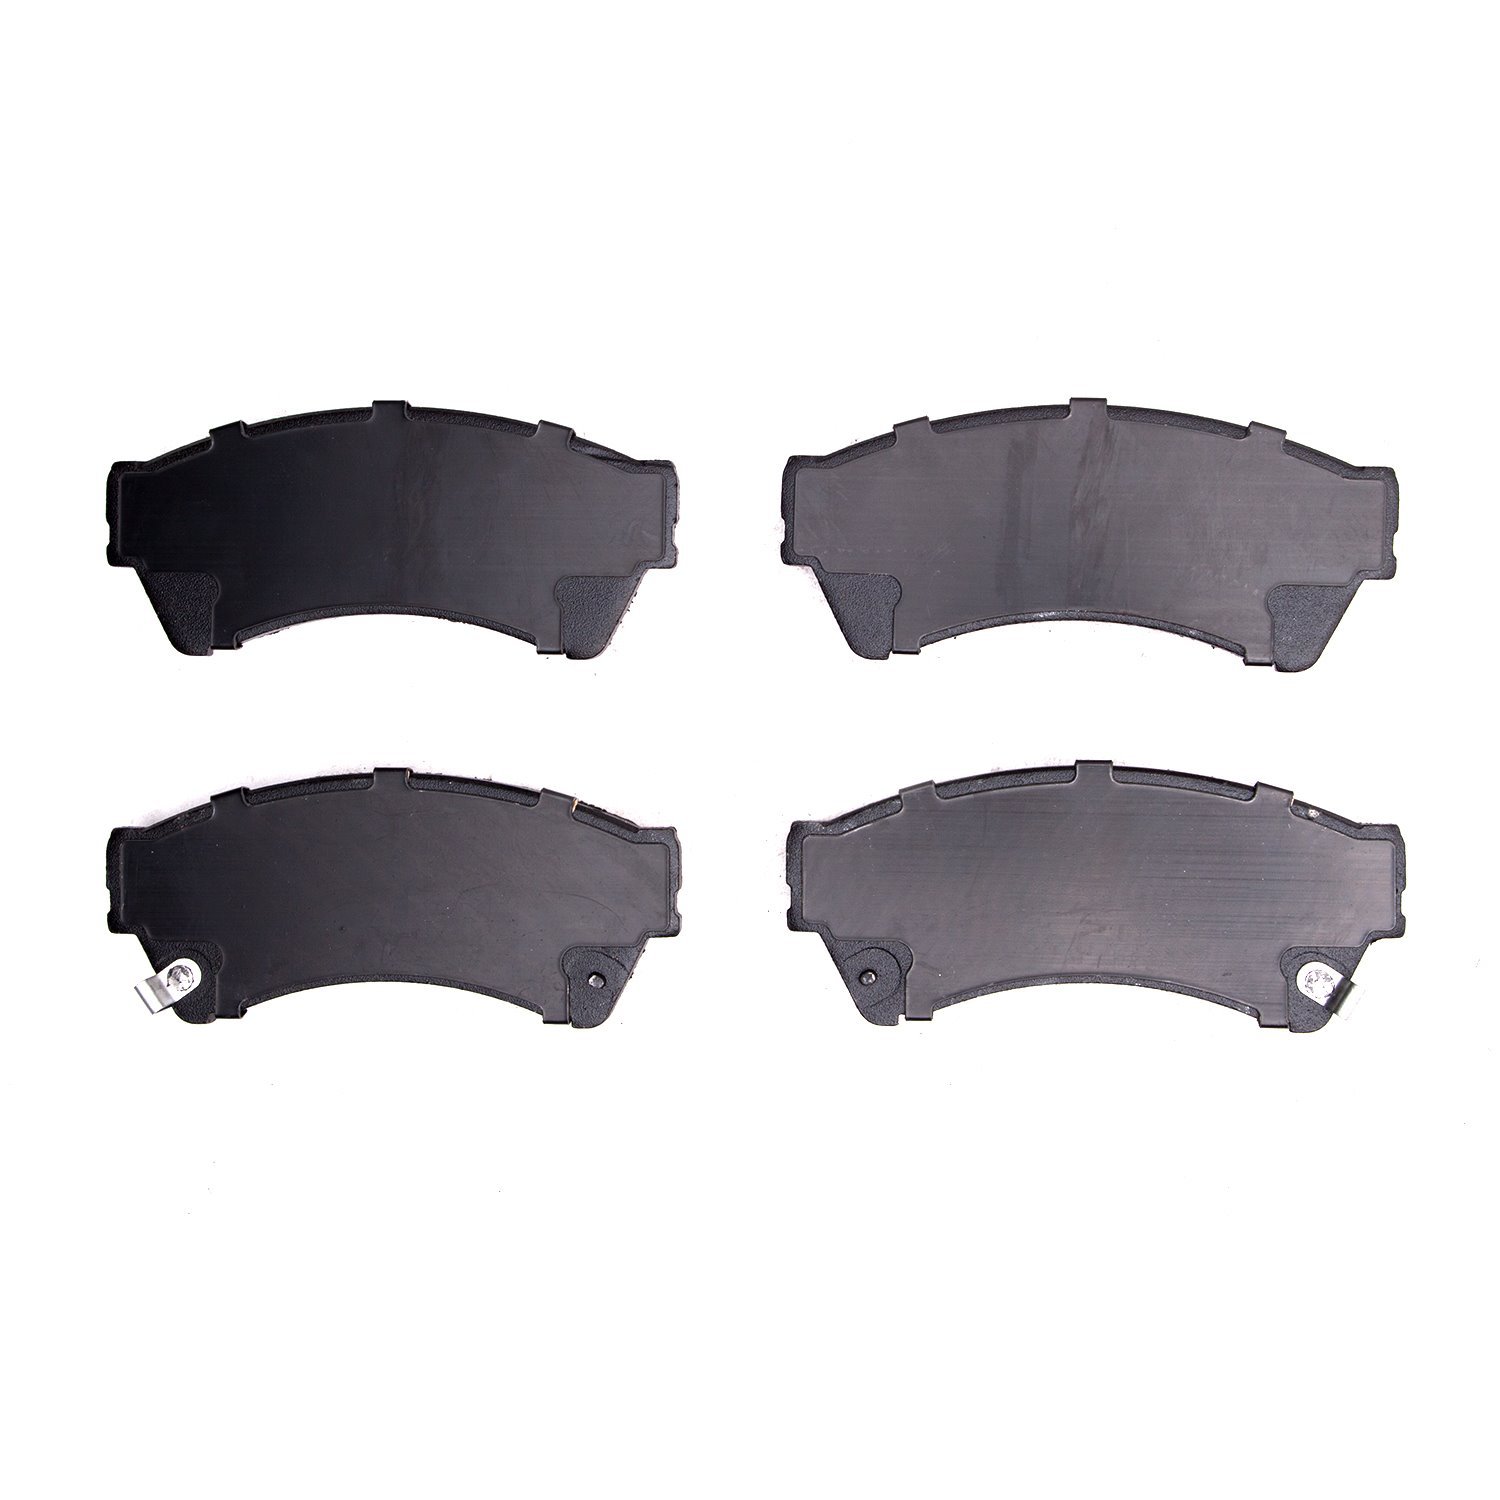 1552-1164-00 5000 Advanced Ceramic Brake Pads, 2006-2012 Ford/Lincoln/Mercury/Mazda, Position: Front